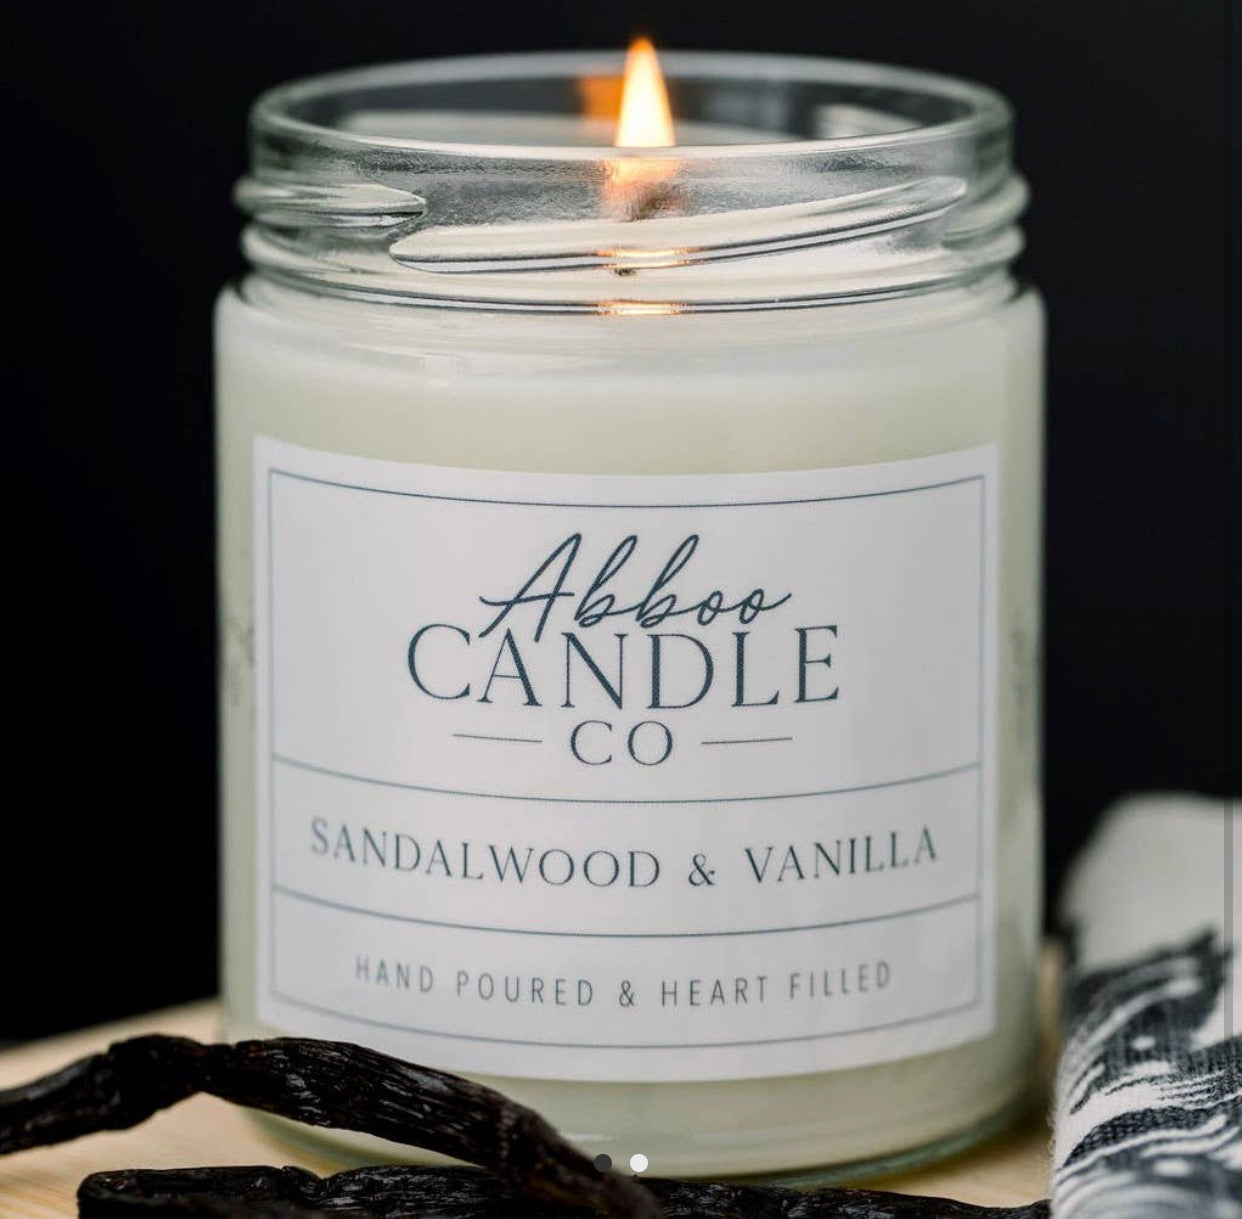 Sandalwood & Vanilla Soy Candle